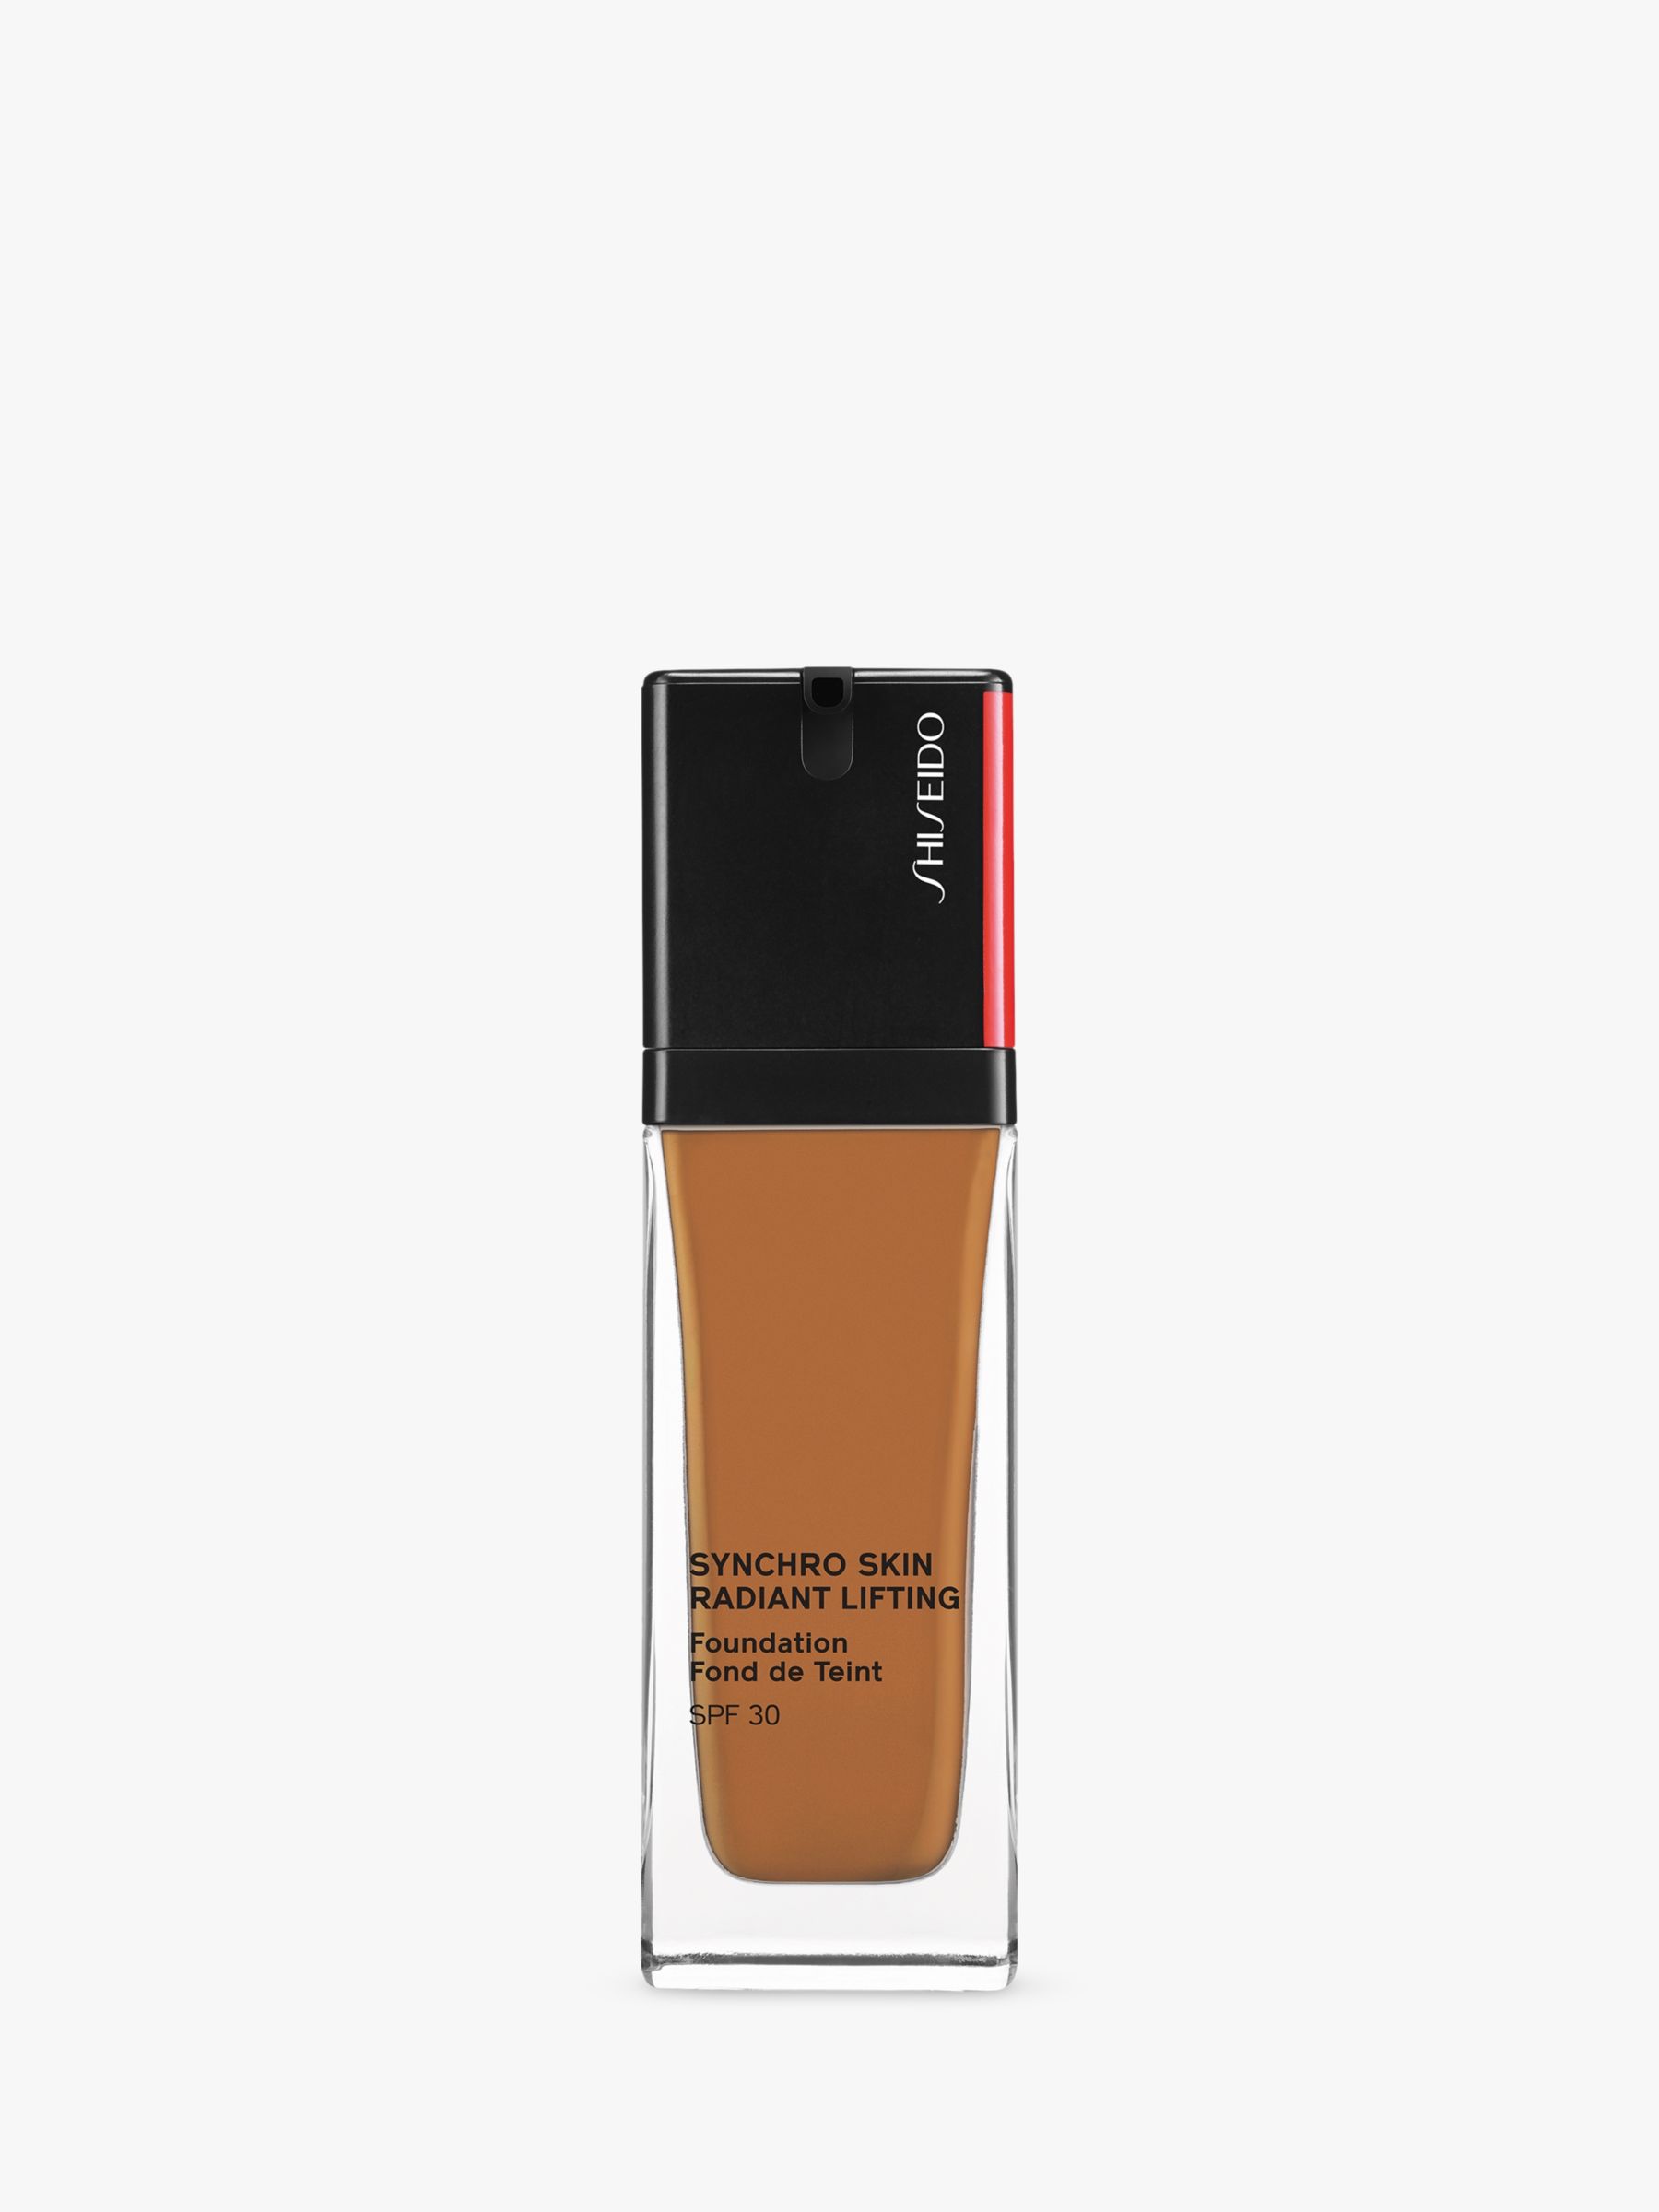 Shiseido Synchro Skin Radiant Lifting Foundation SPF 30, 440 Amber 1